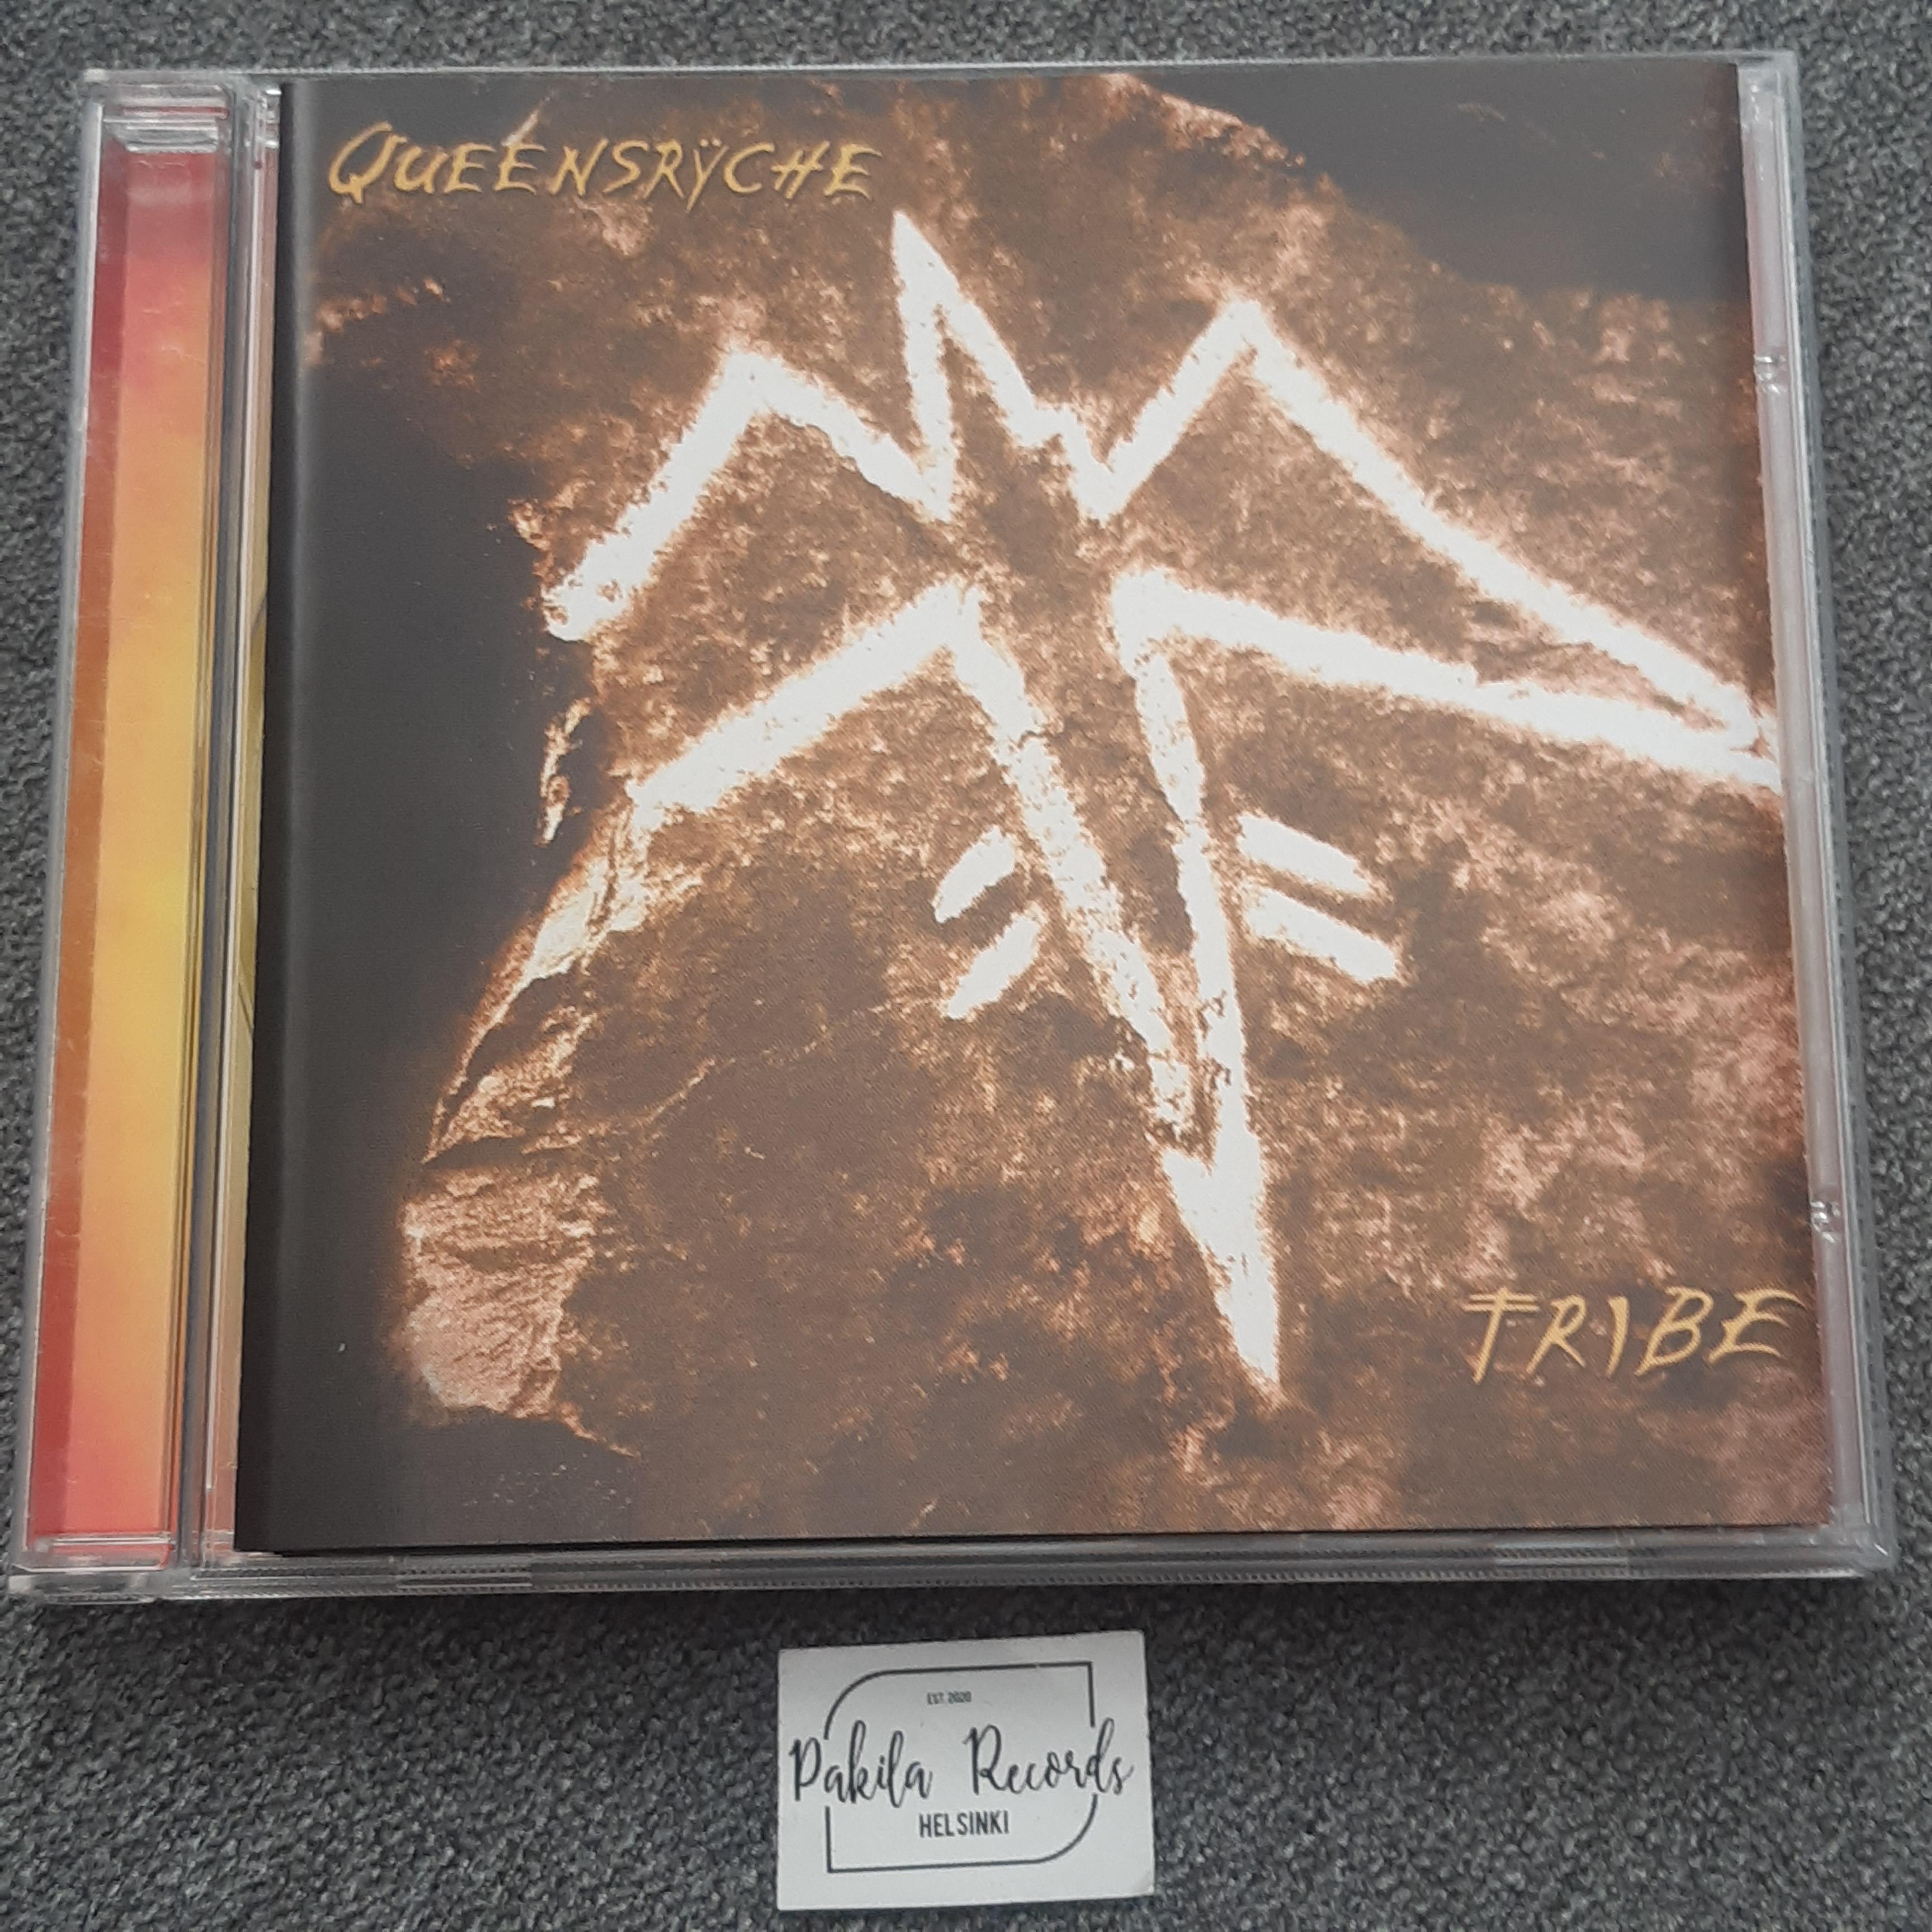 Queensryche - Tribal - CD (käytetty)